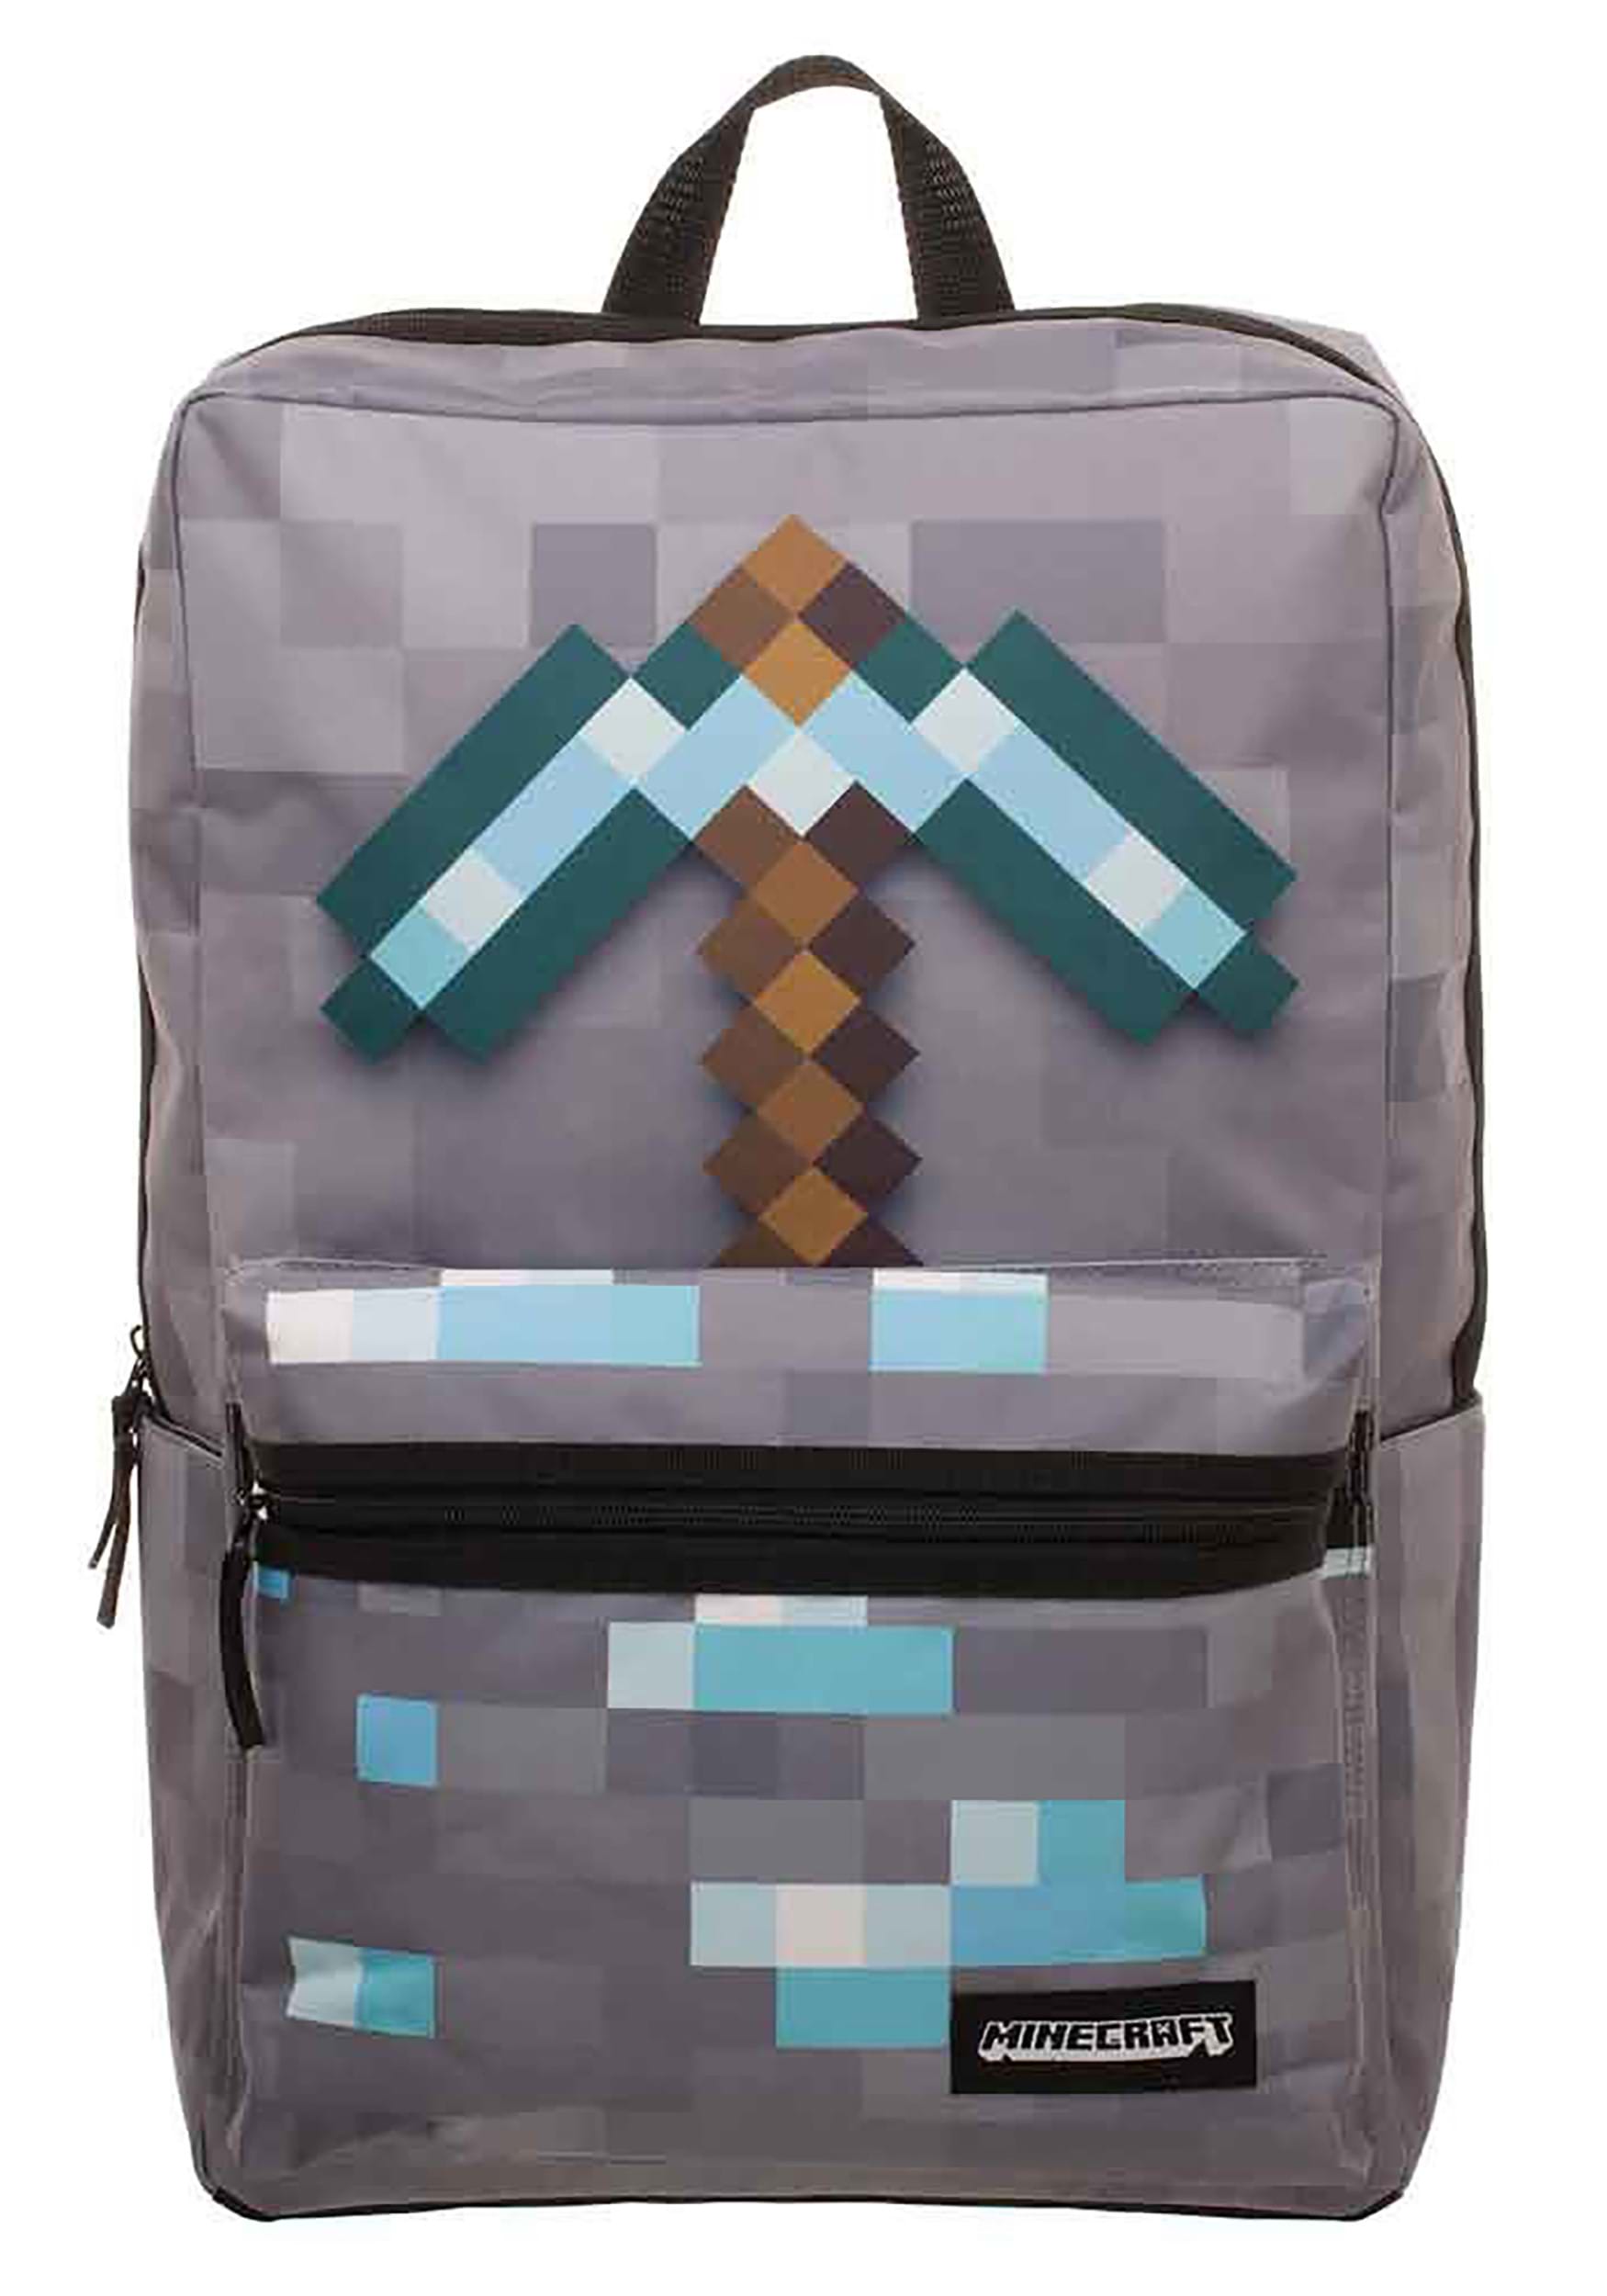 Minecraft Primary School Bag Minecraft Backpack